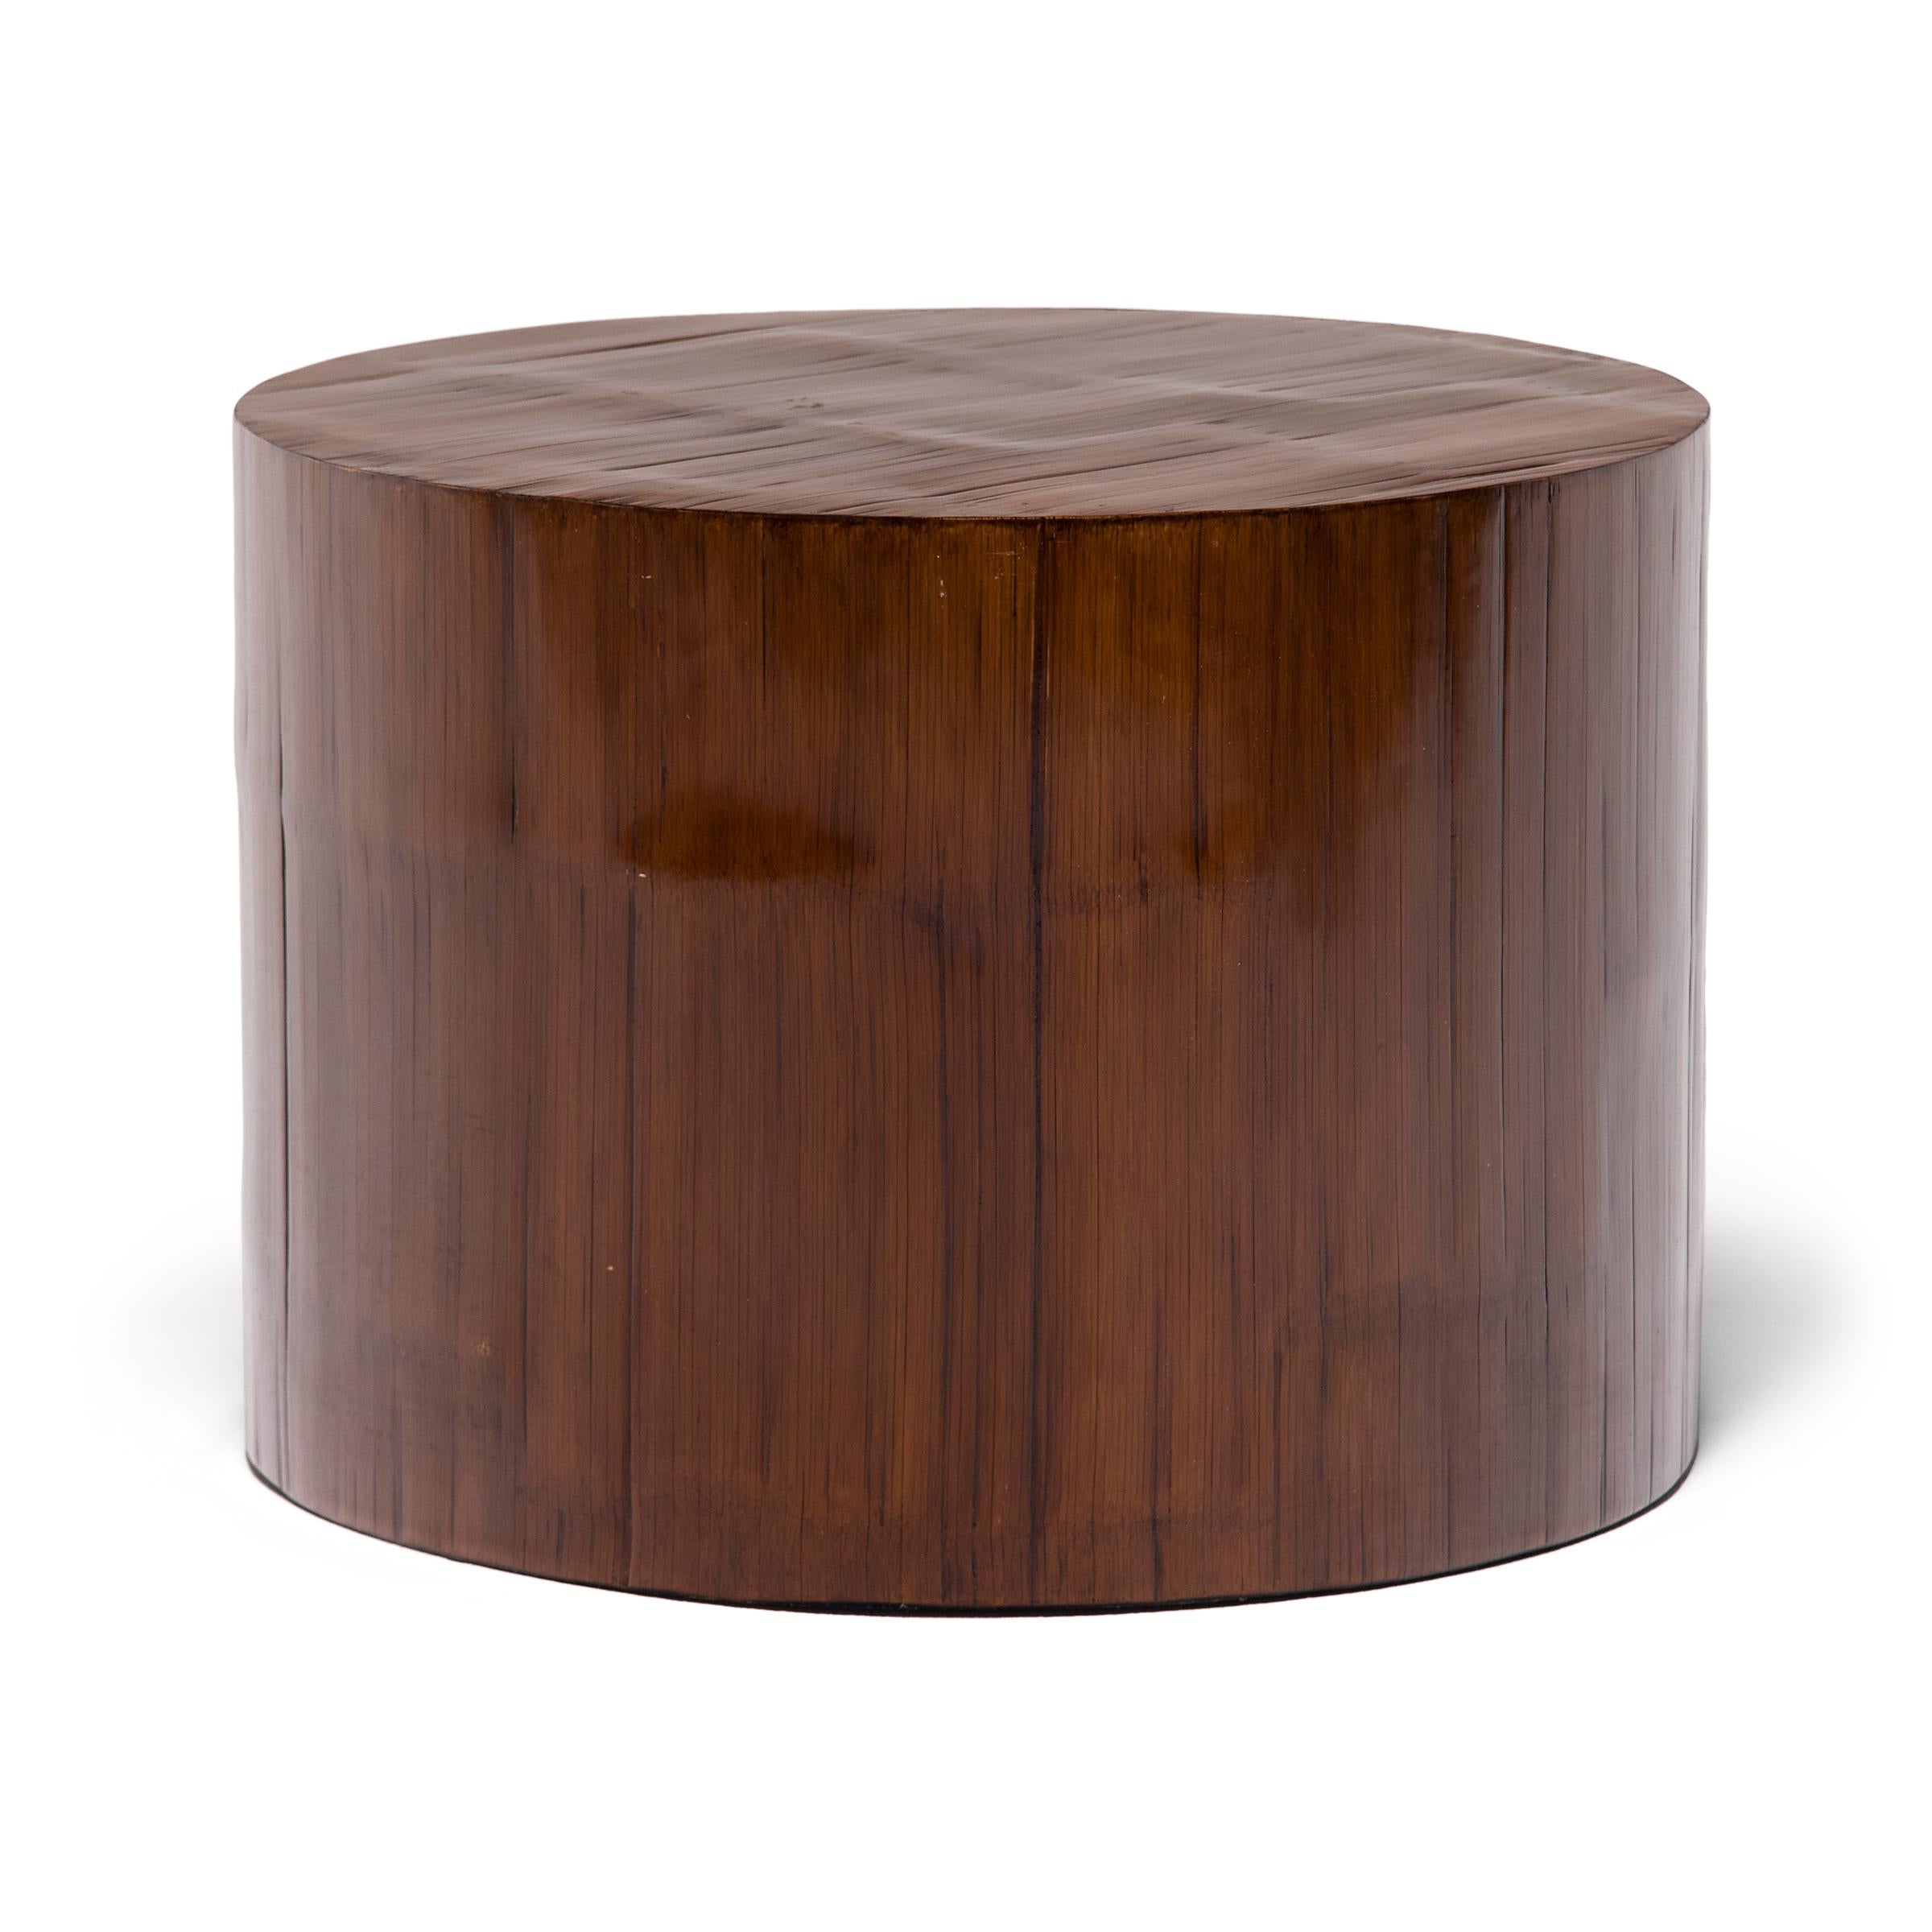 Minimalist Chinese Round Crushed Bamboo Table